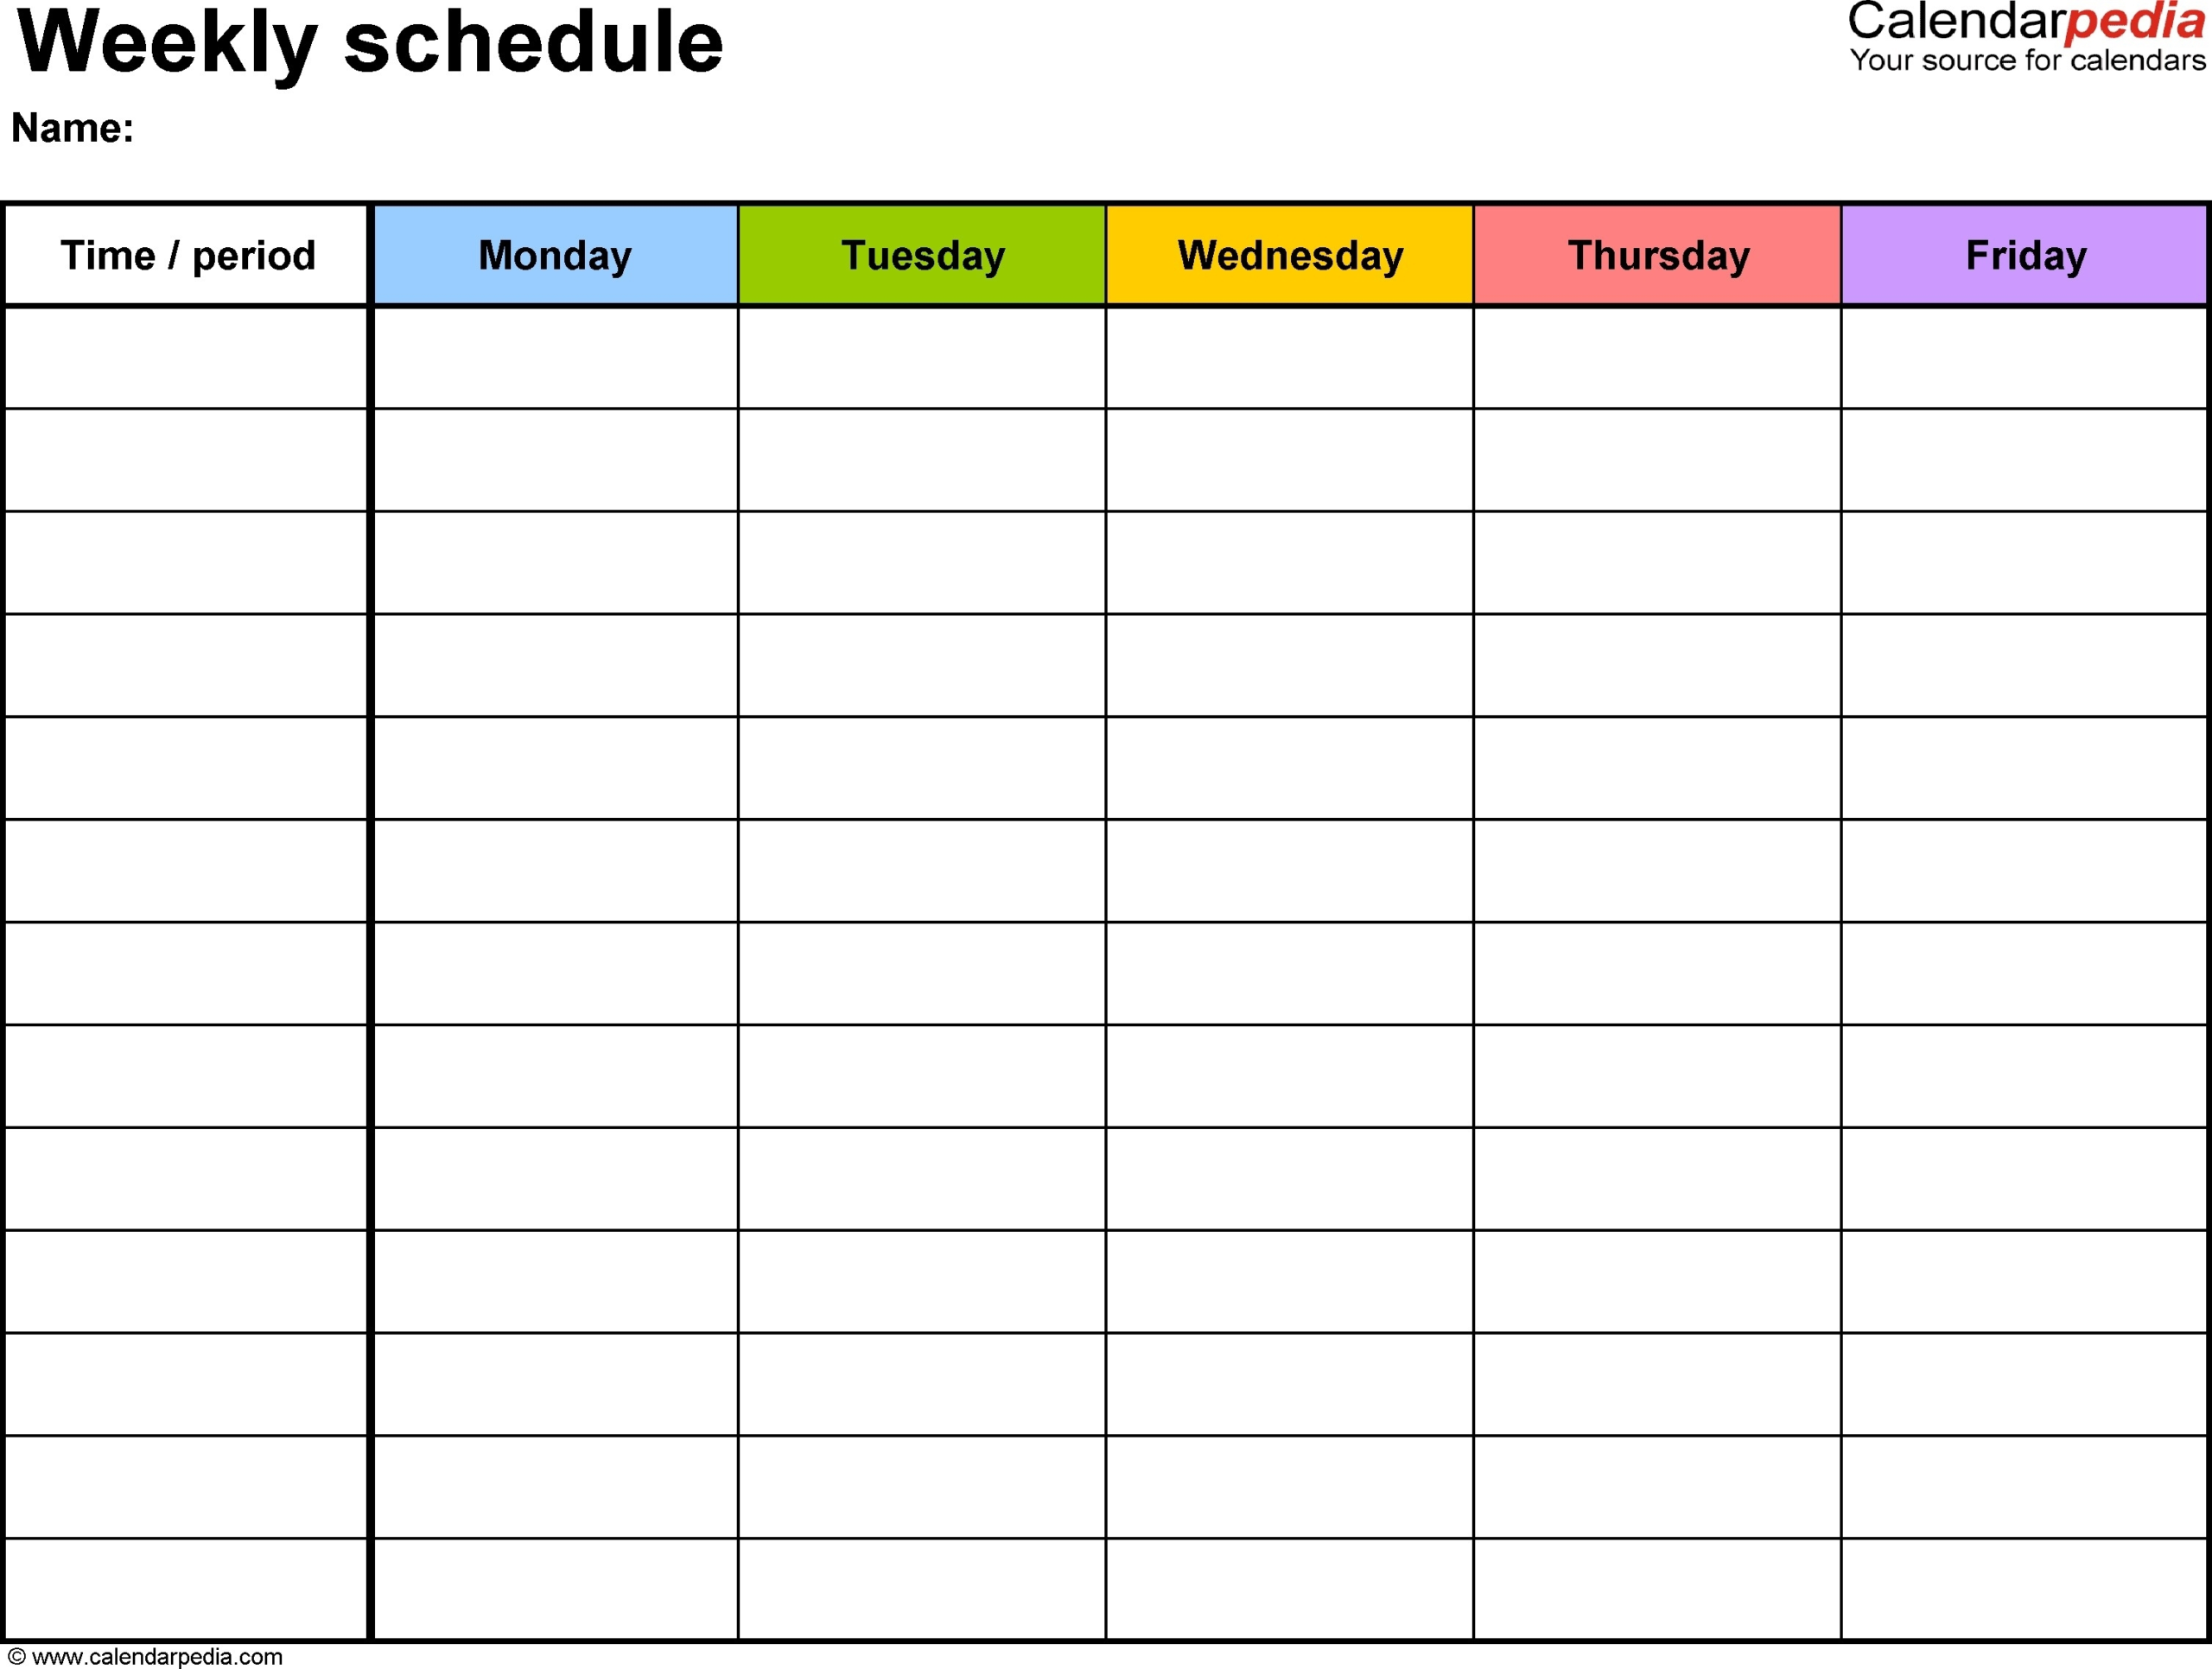 Printable Calendar With Time Slots | Ten Free Printable throughout Weekly Planner With Time Slots Printable